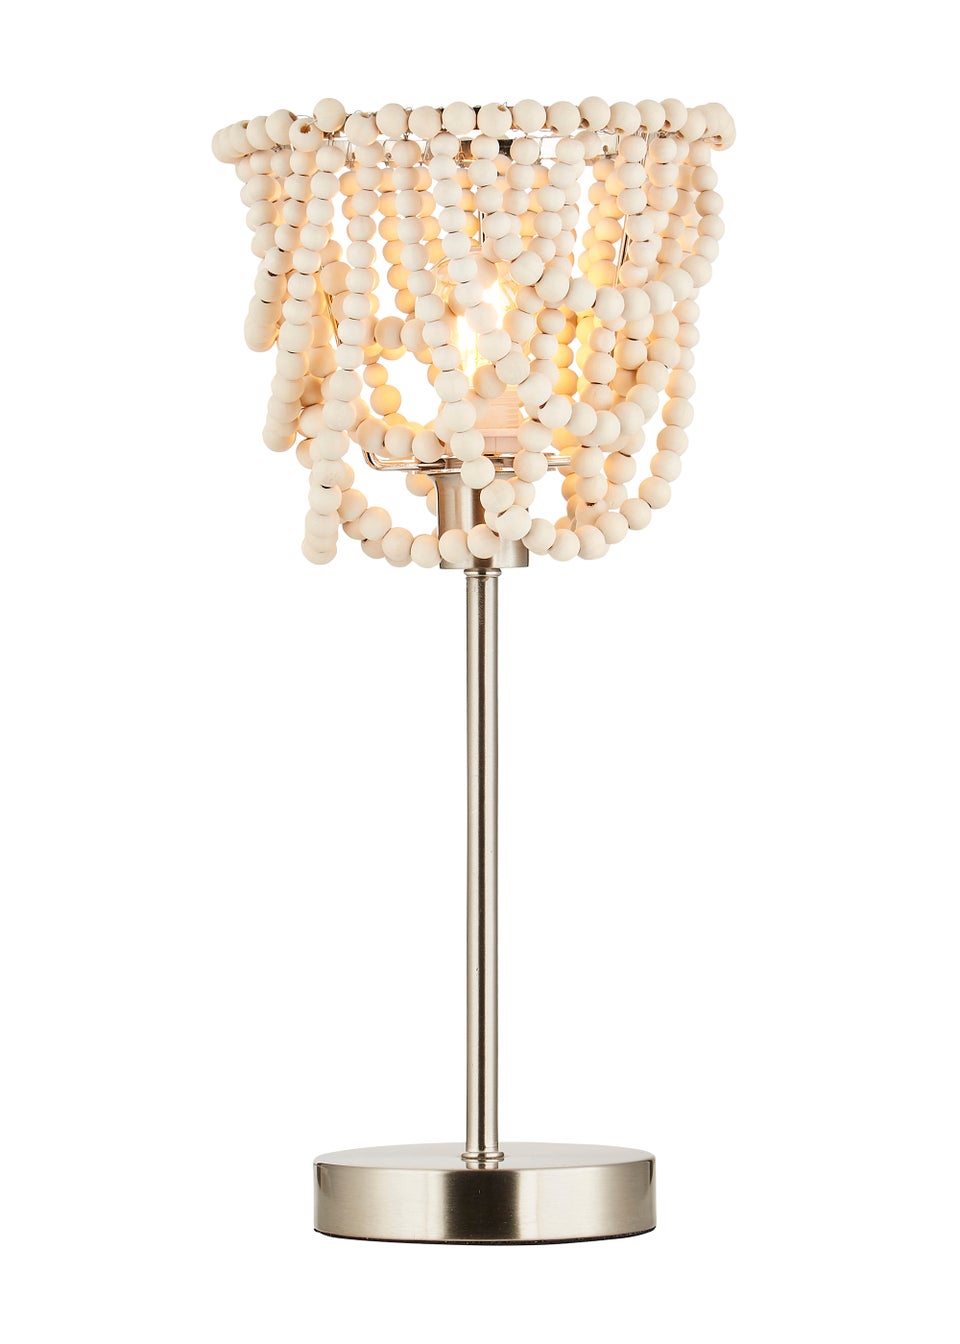 Inlight Beaded Table Lamp (40cm x 18cm x 18cm)